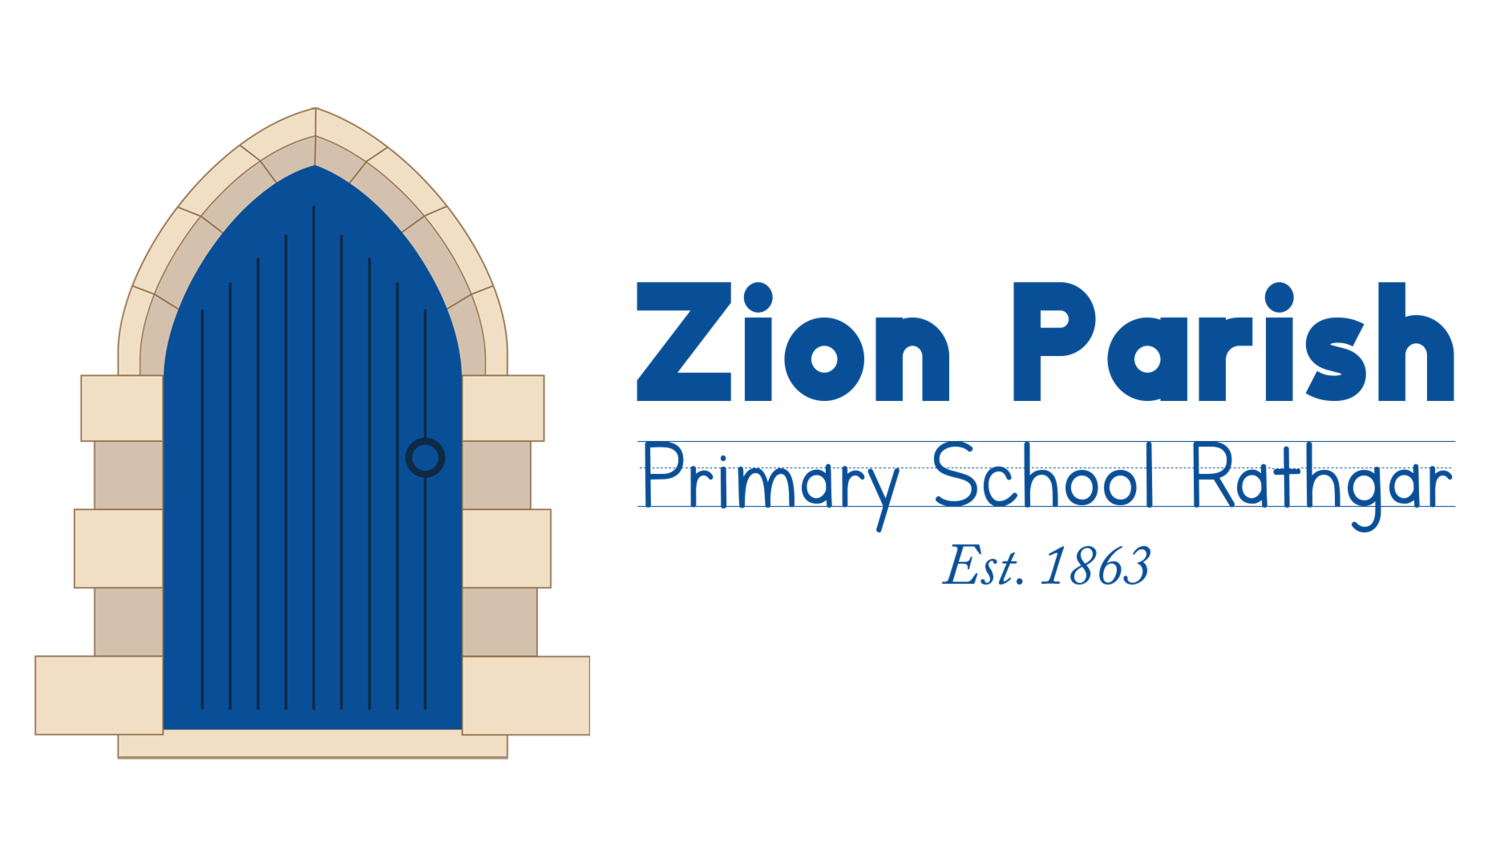 Zion Parish Primary School